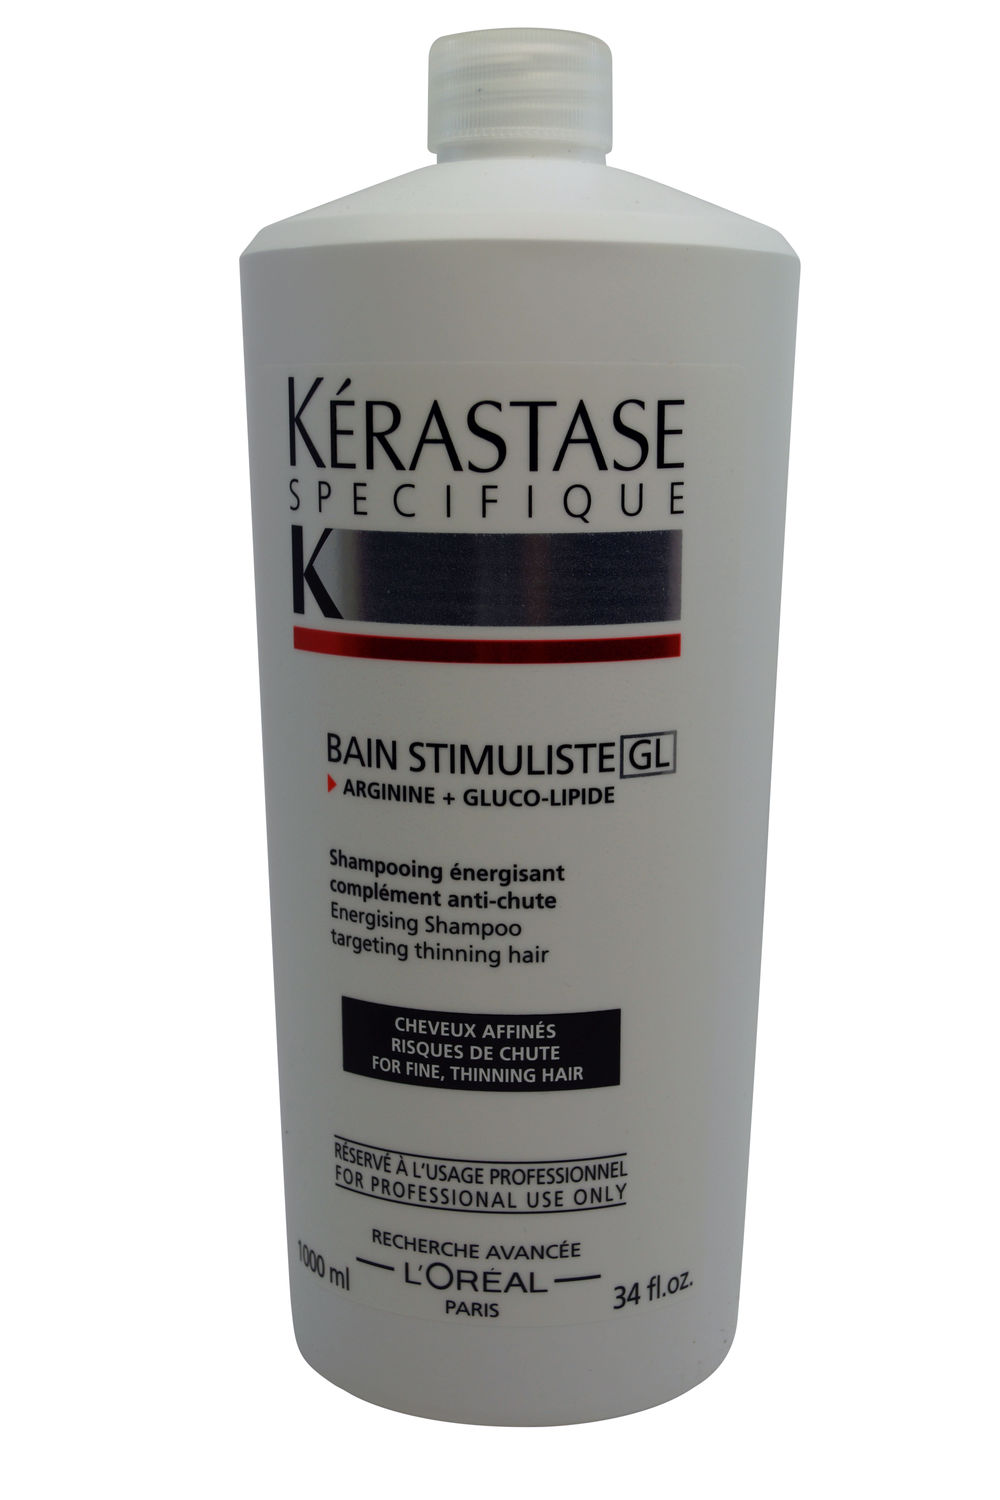 Buy Kerastase Specifique Bain Stimuliste Gel (250 ml) - Find Offers, Discounts, Reviews, Features, Usage, Ingredients for Kerastase Specifique Bain Stimuliste Gel online in India |